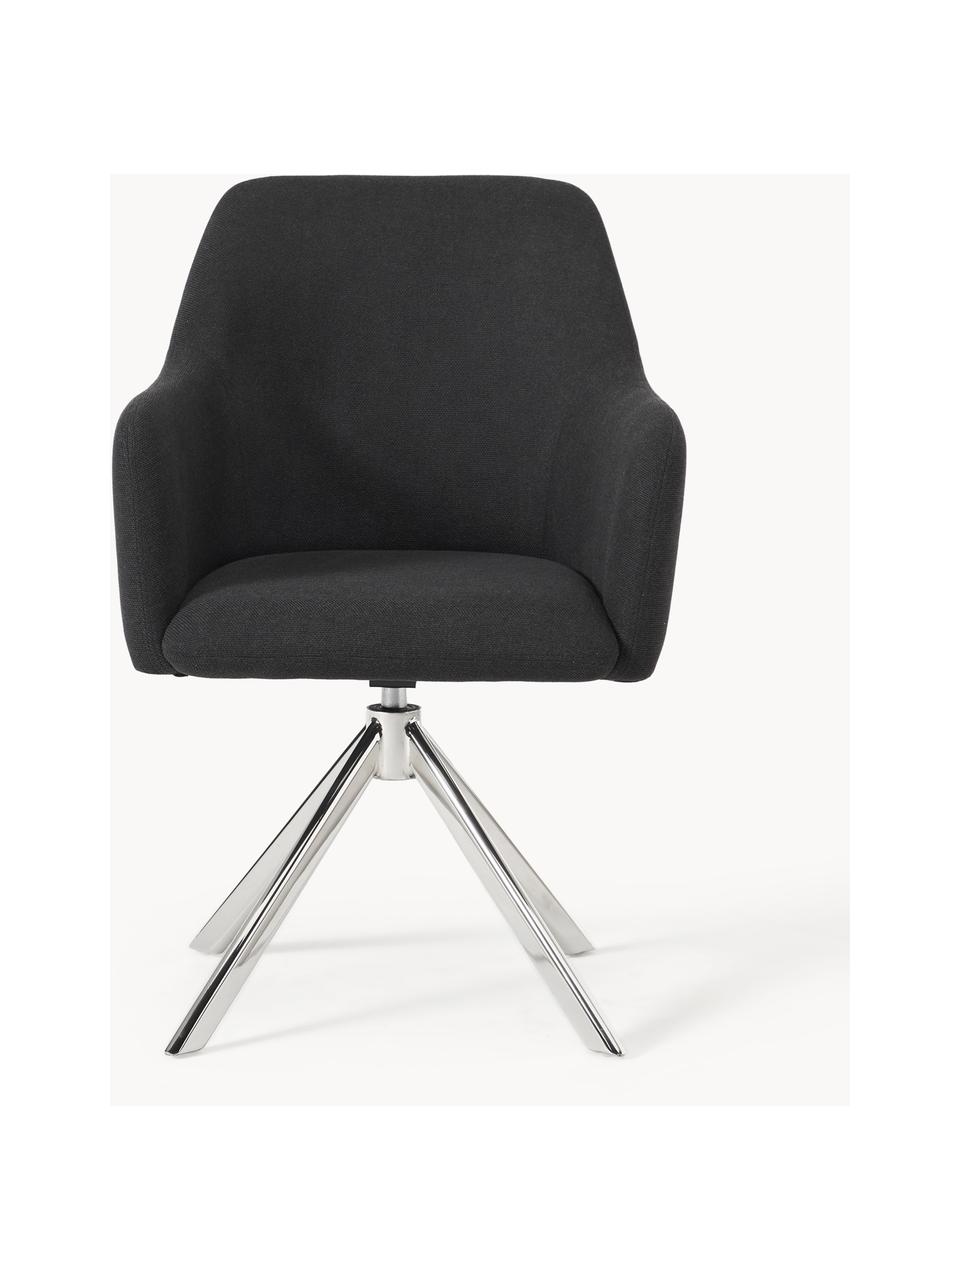 Otočná židle s područkami Isla, Černá, stříbrná lesklá, Š 63 cm, V 58 cm